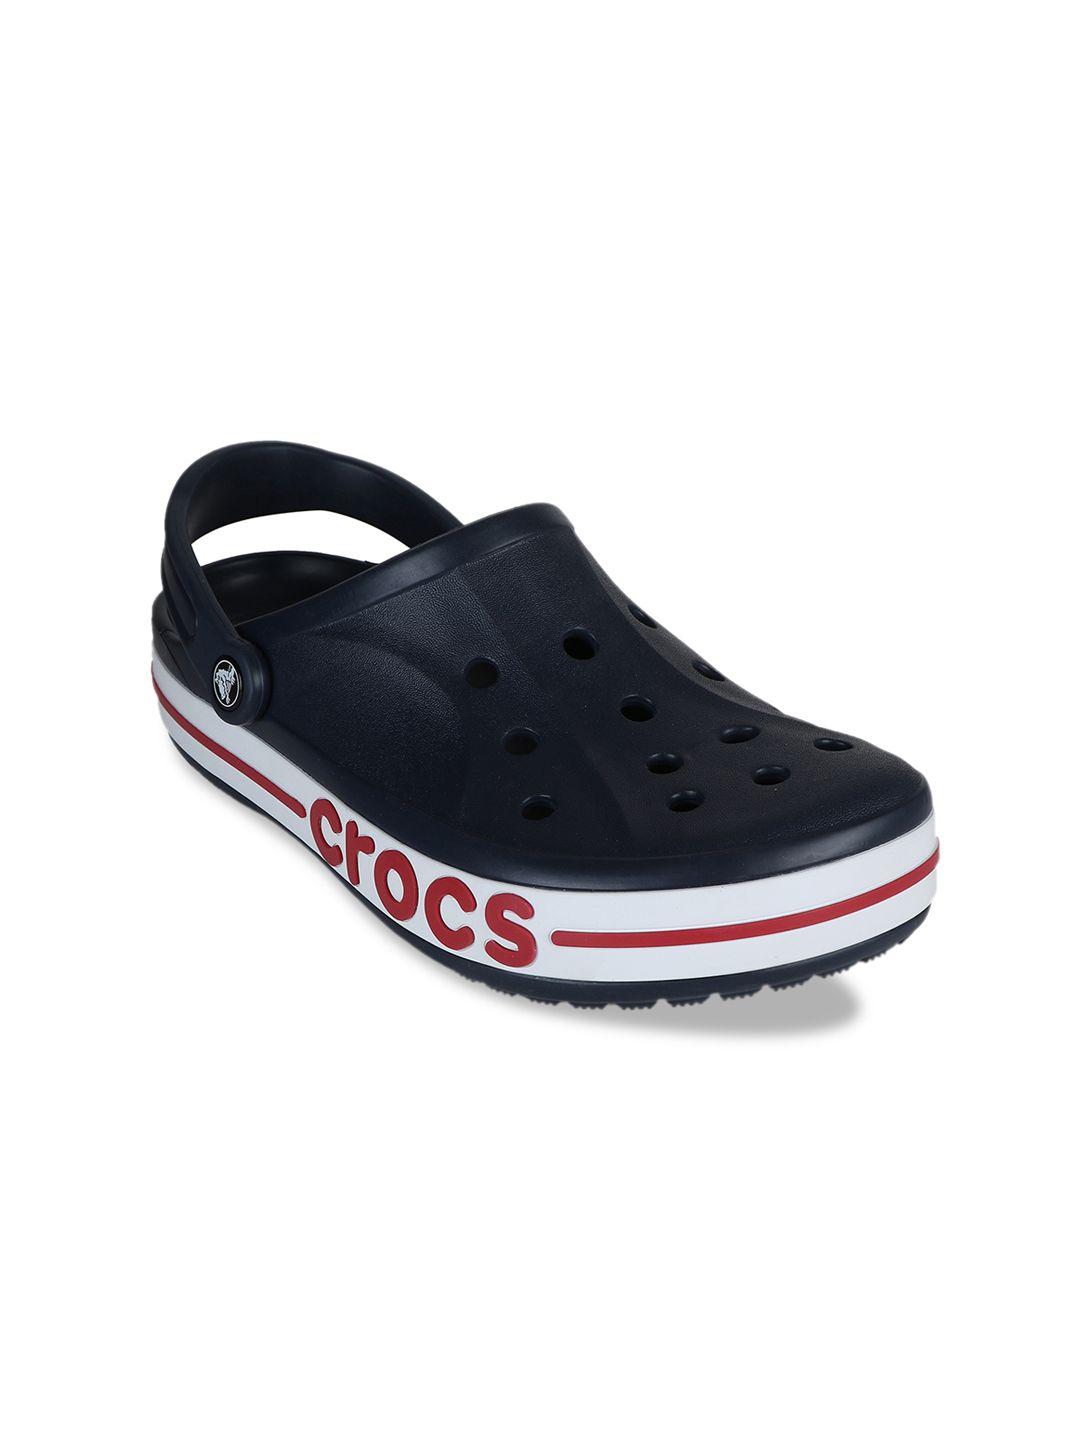 crocs men navy blue sandals